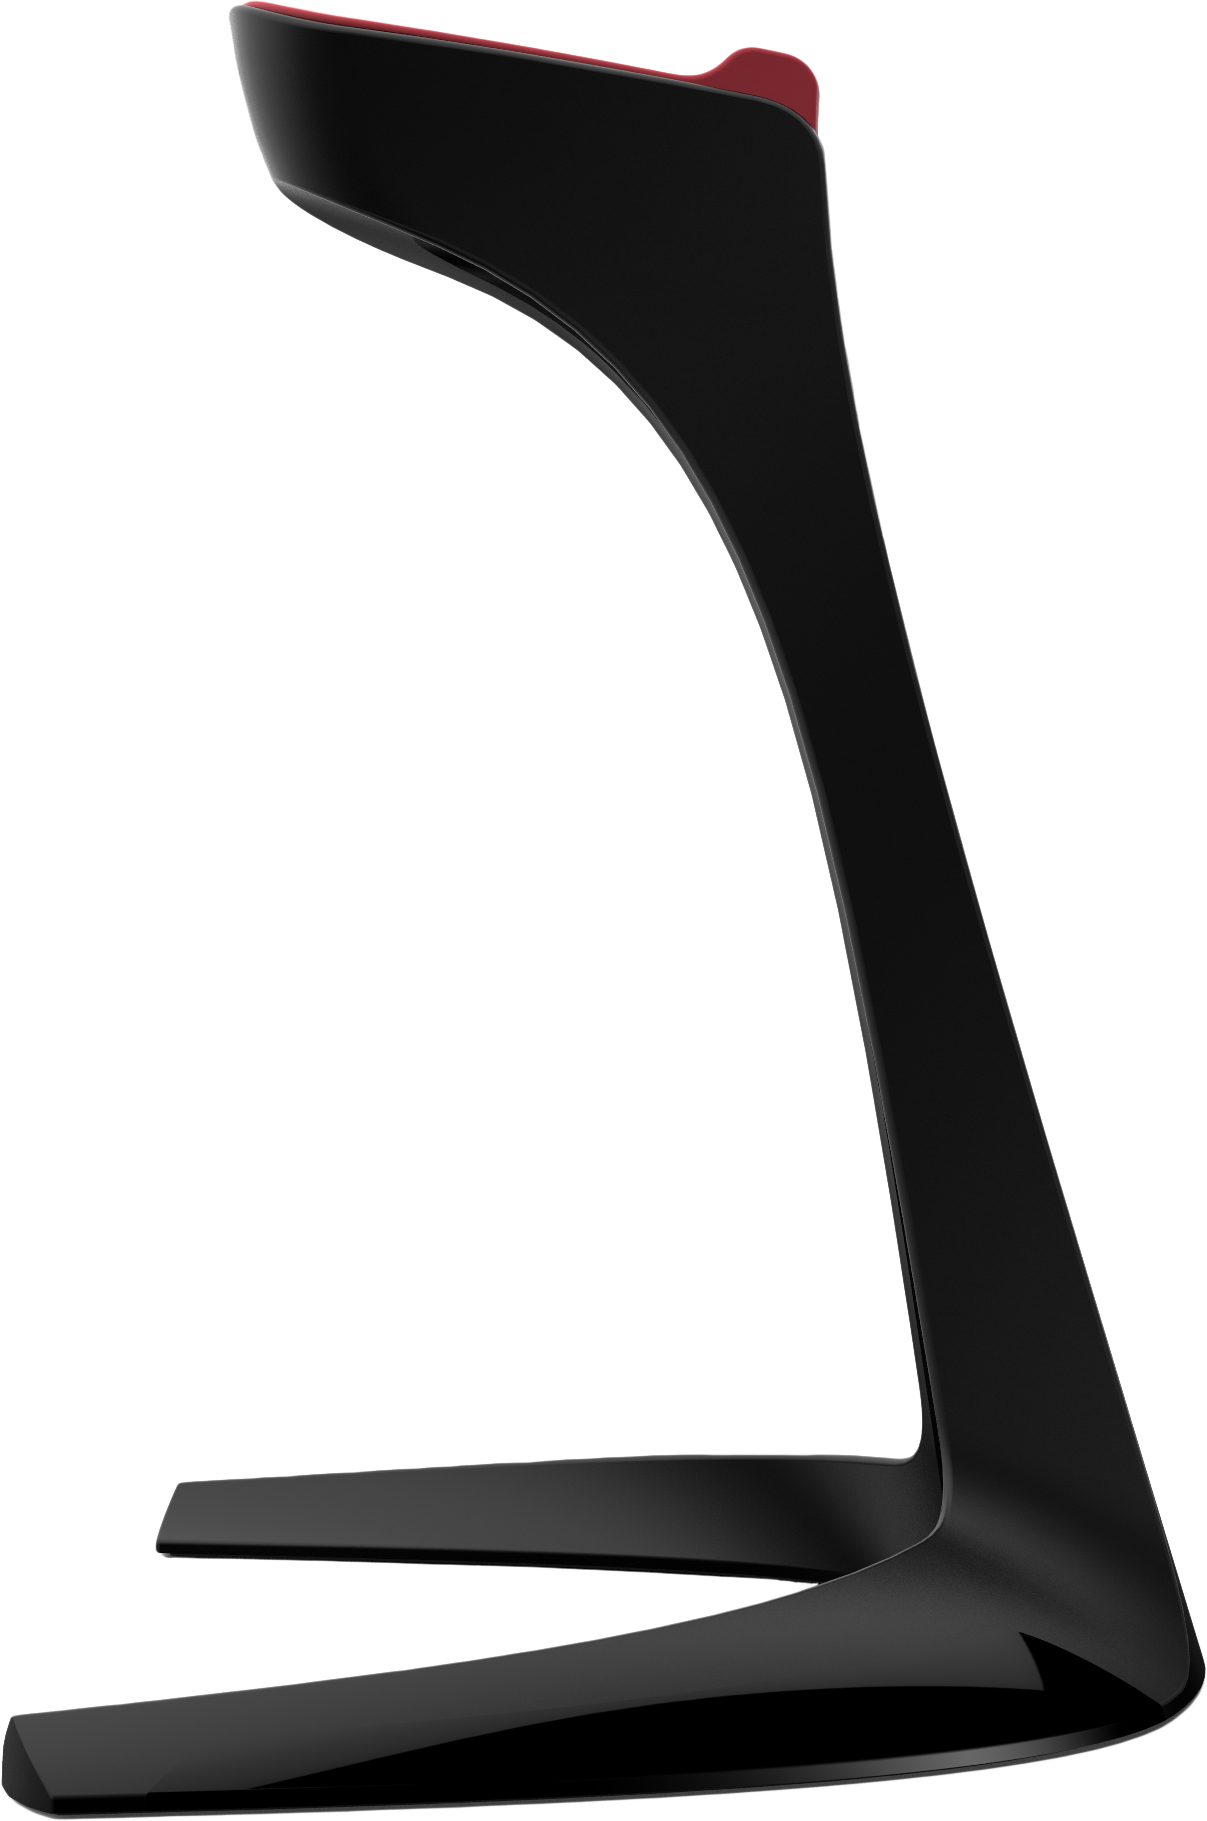 EXCEDO Gaming Headset Stand, schwarz